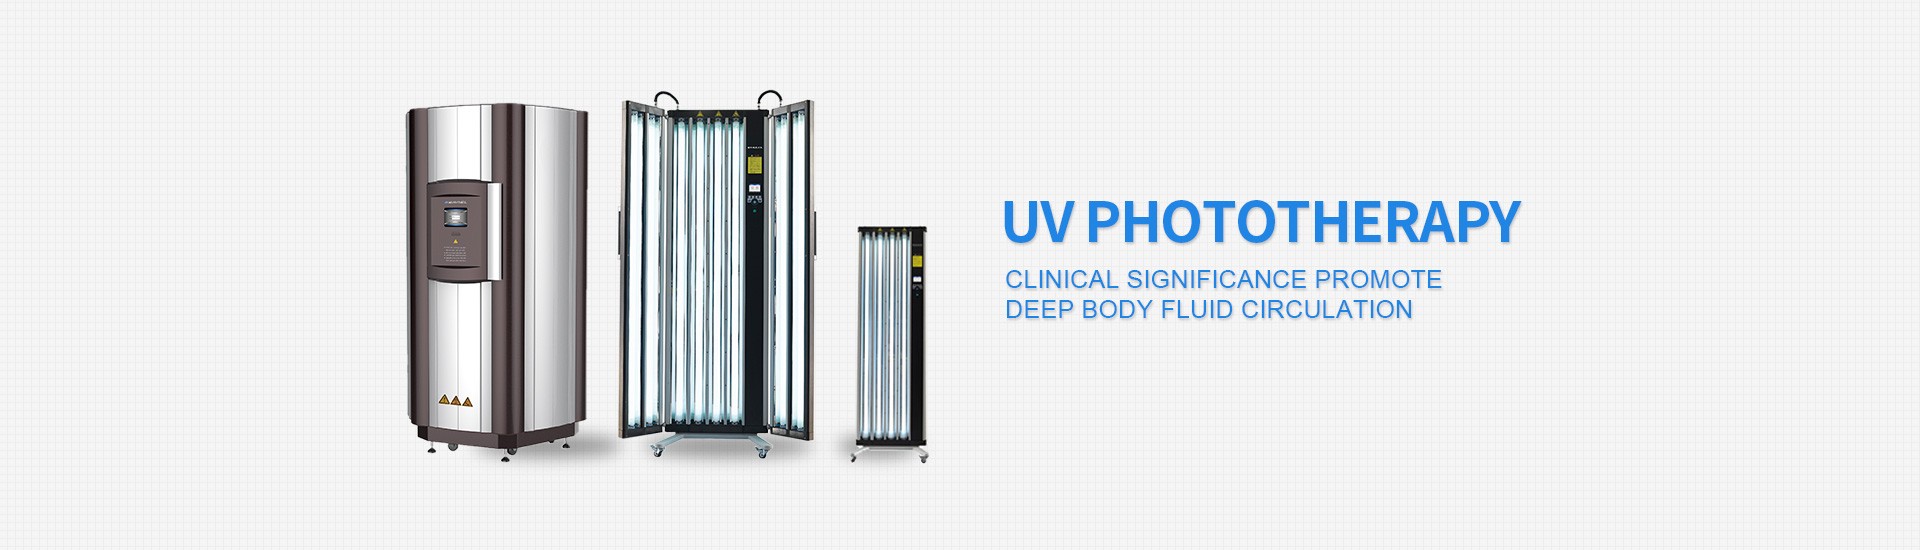 UV-fototherapie